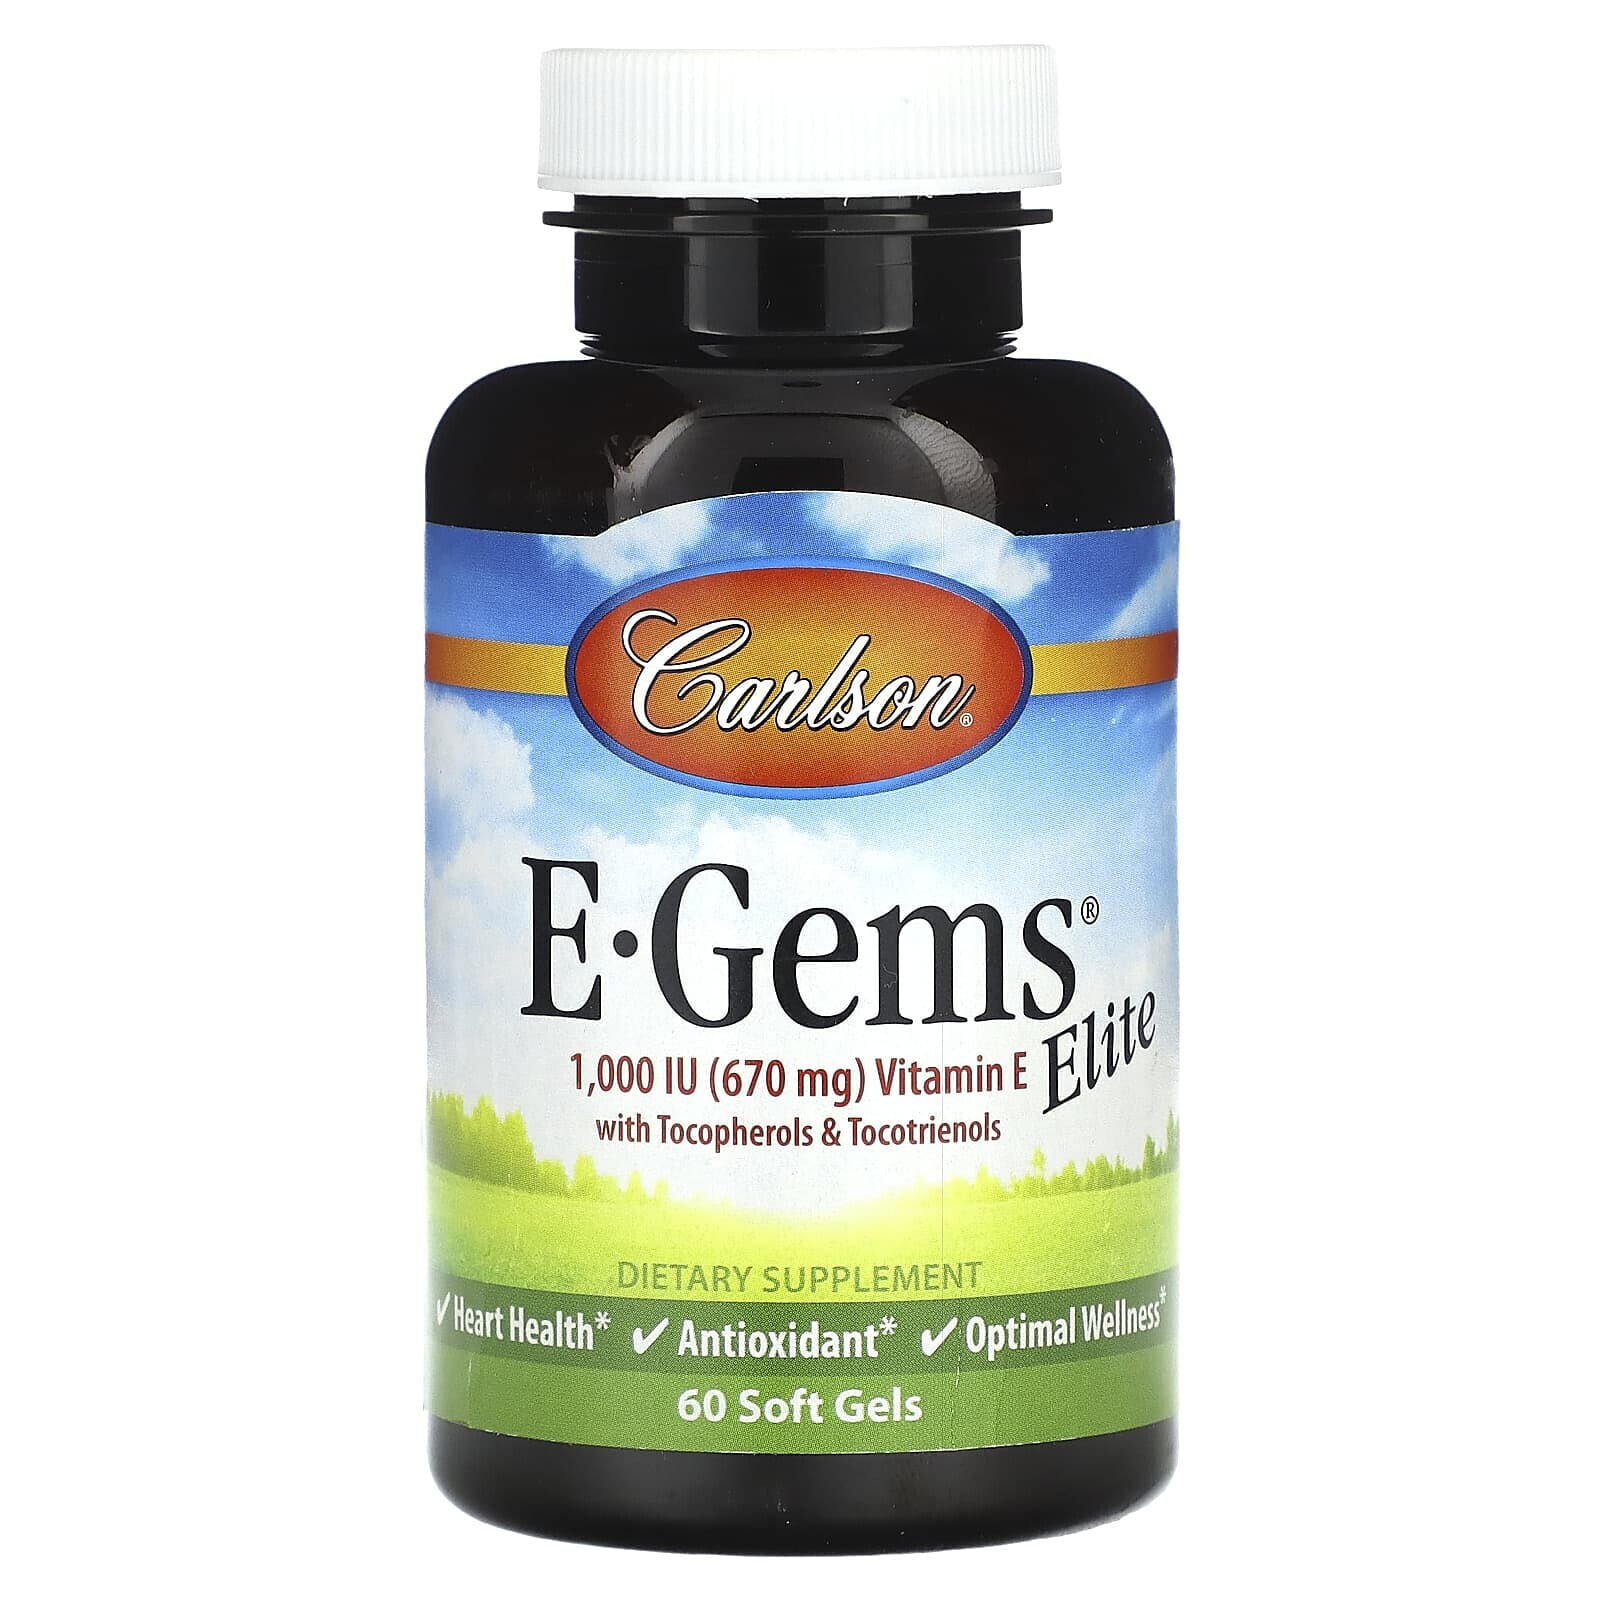 Carlson, E-Gems Elite, витамин E, 670 мг (1000 МЕ), 120 мягких таблеток